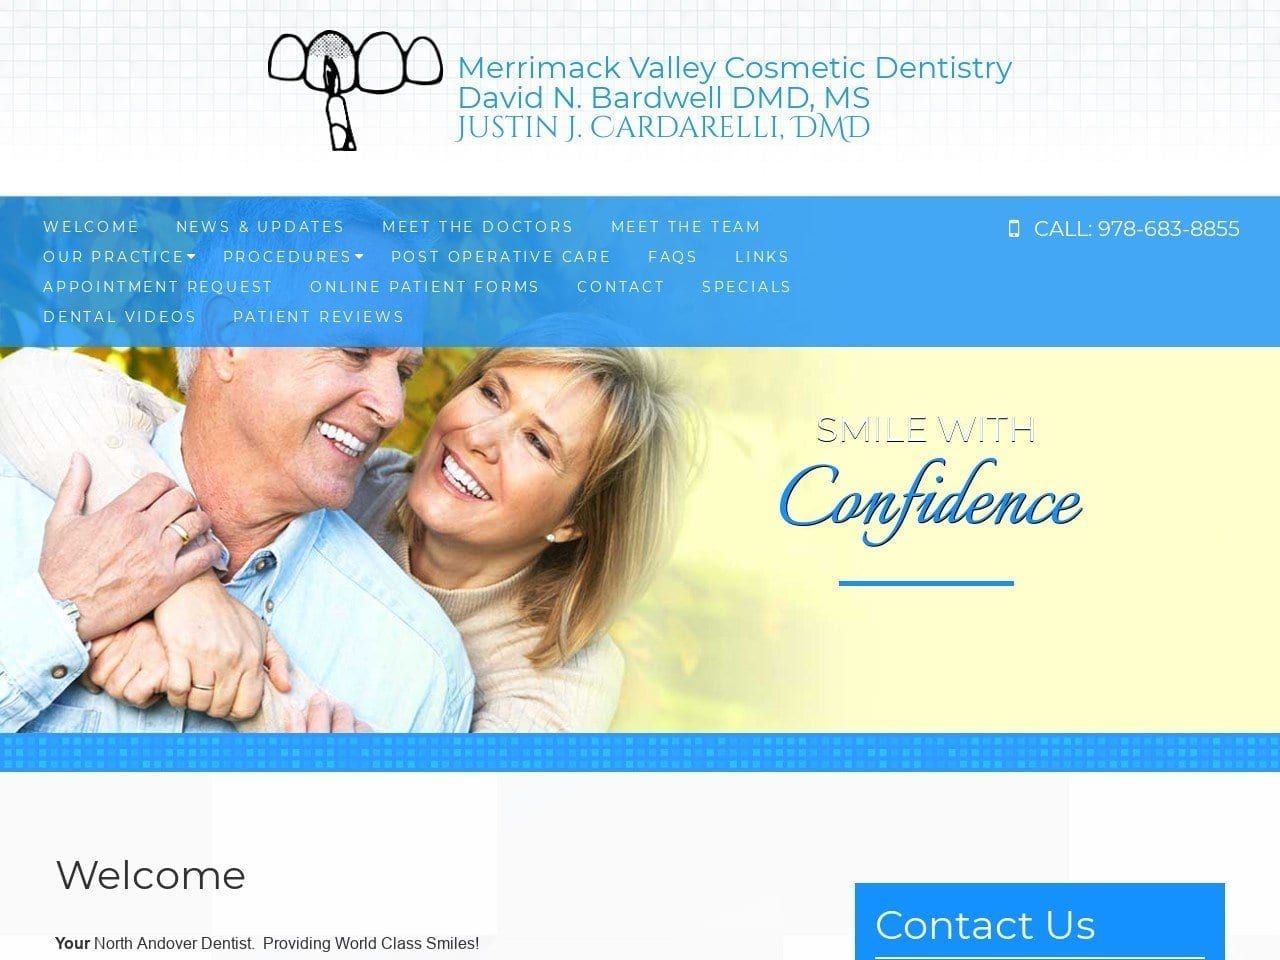 Merrimack Valley Cosmetic Dentist Website Screenshot from drbardwell.com